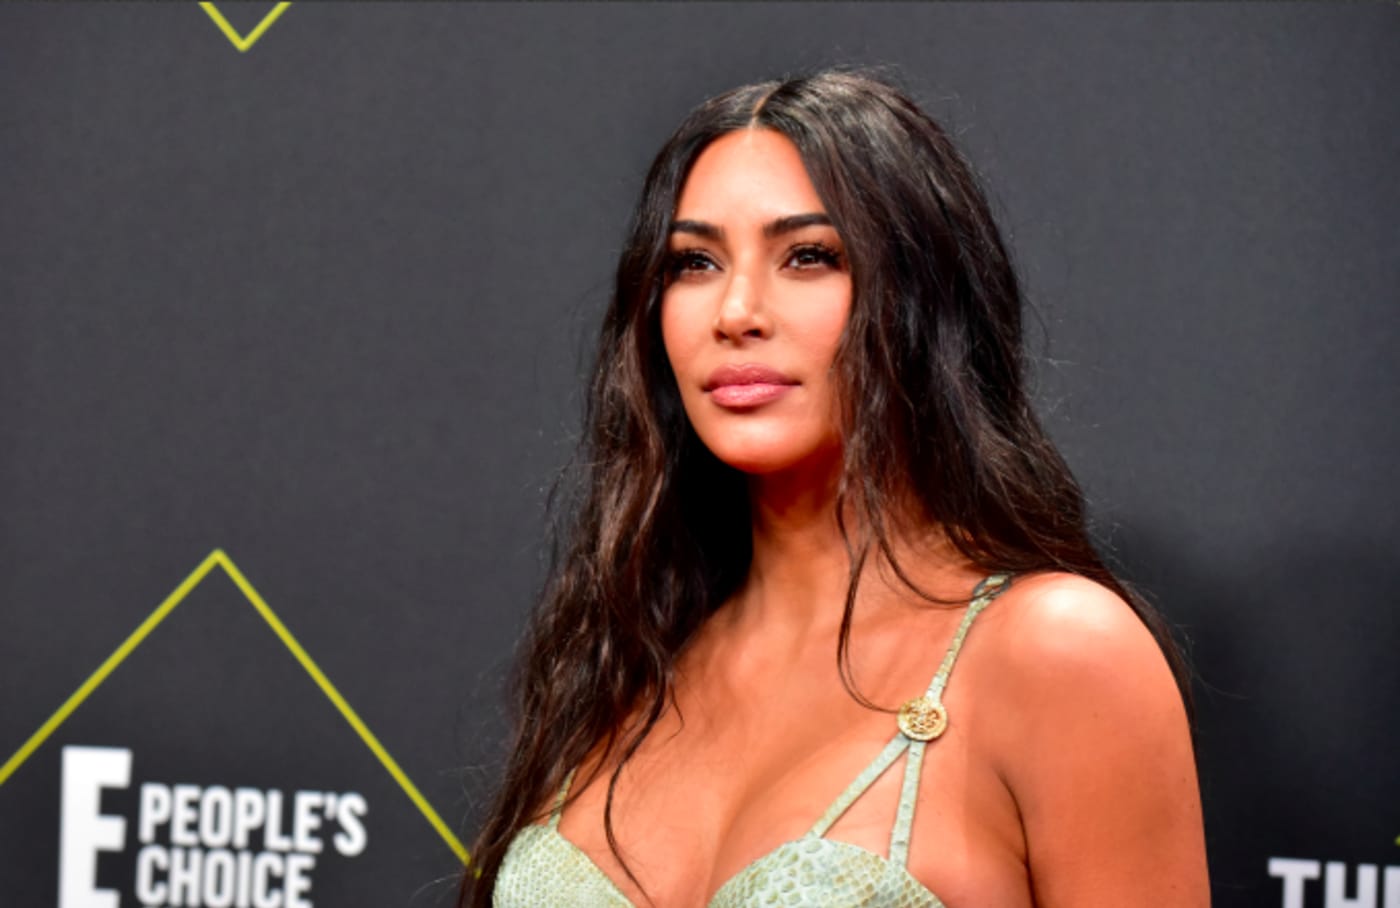 Kim Kardashian attends the 2019 E! People's Choice Awards